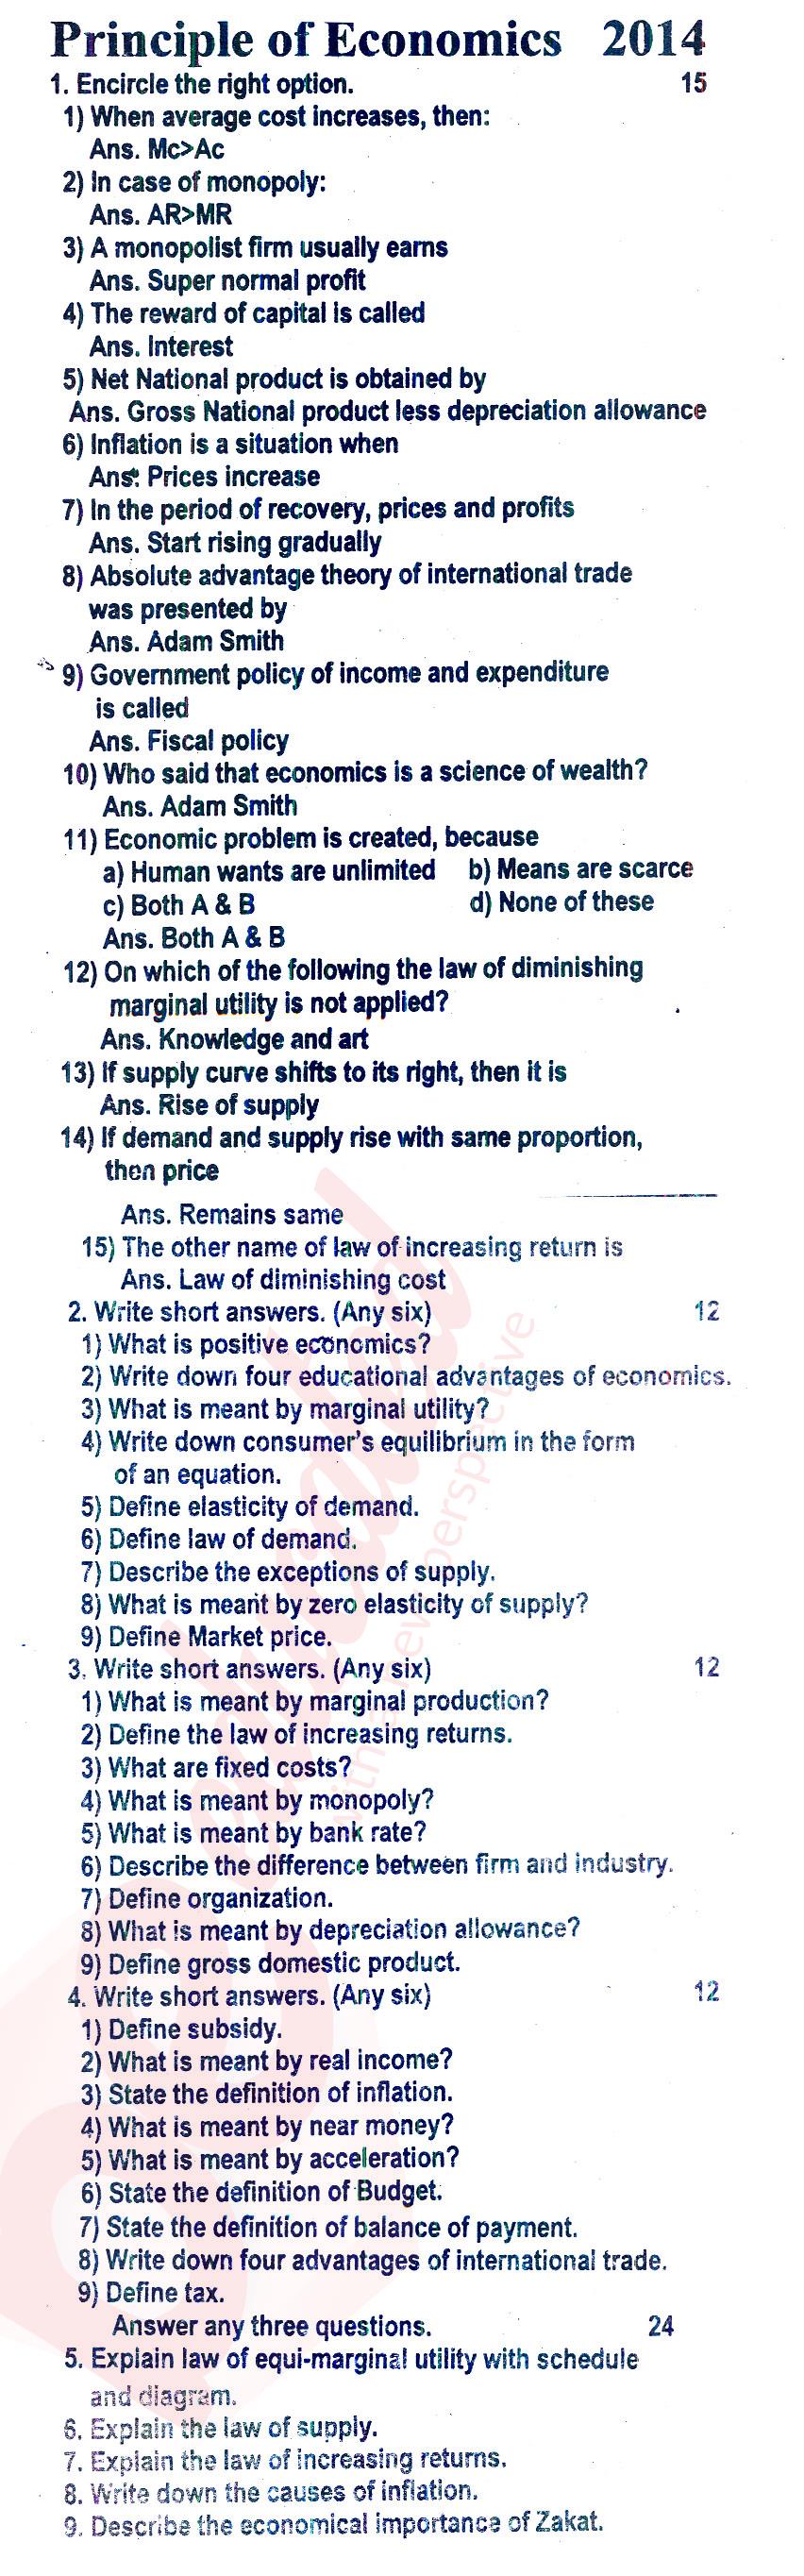 Principles of Economics ICOM Part 1 Past Paper Group 1 BISE Rawalpindi 2014